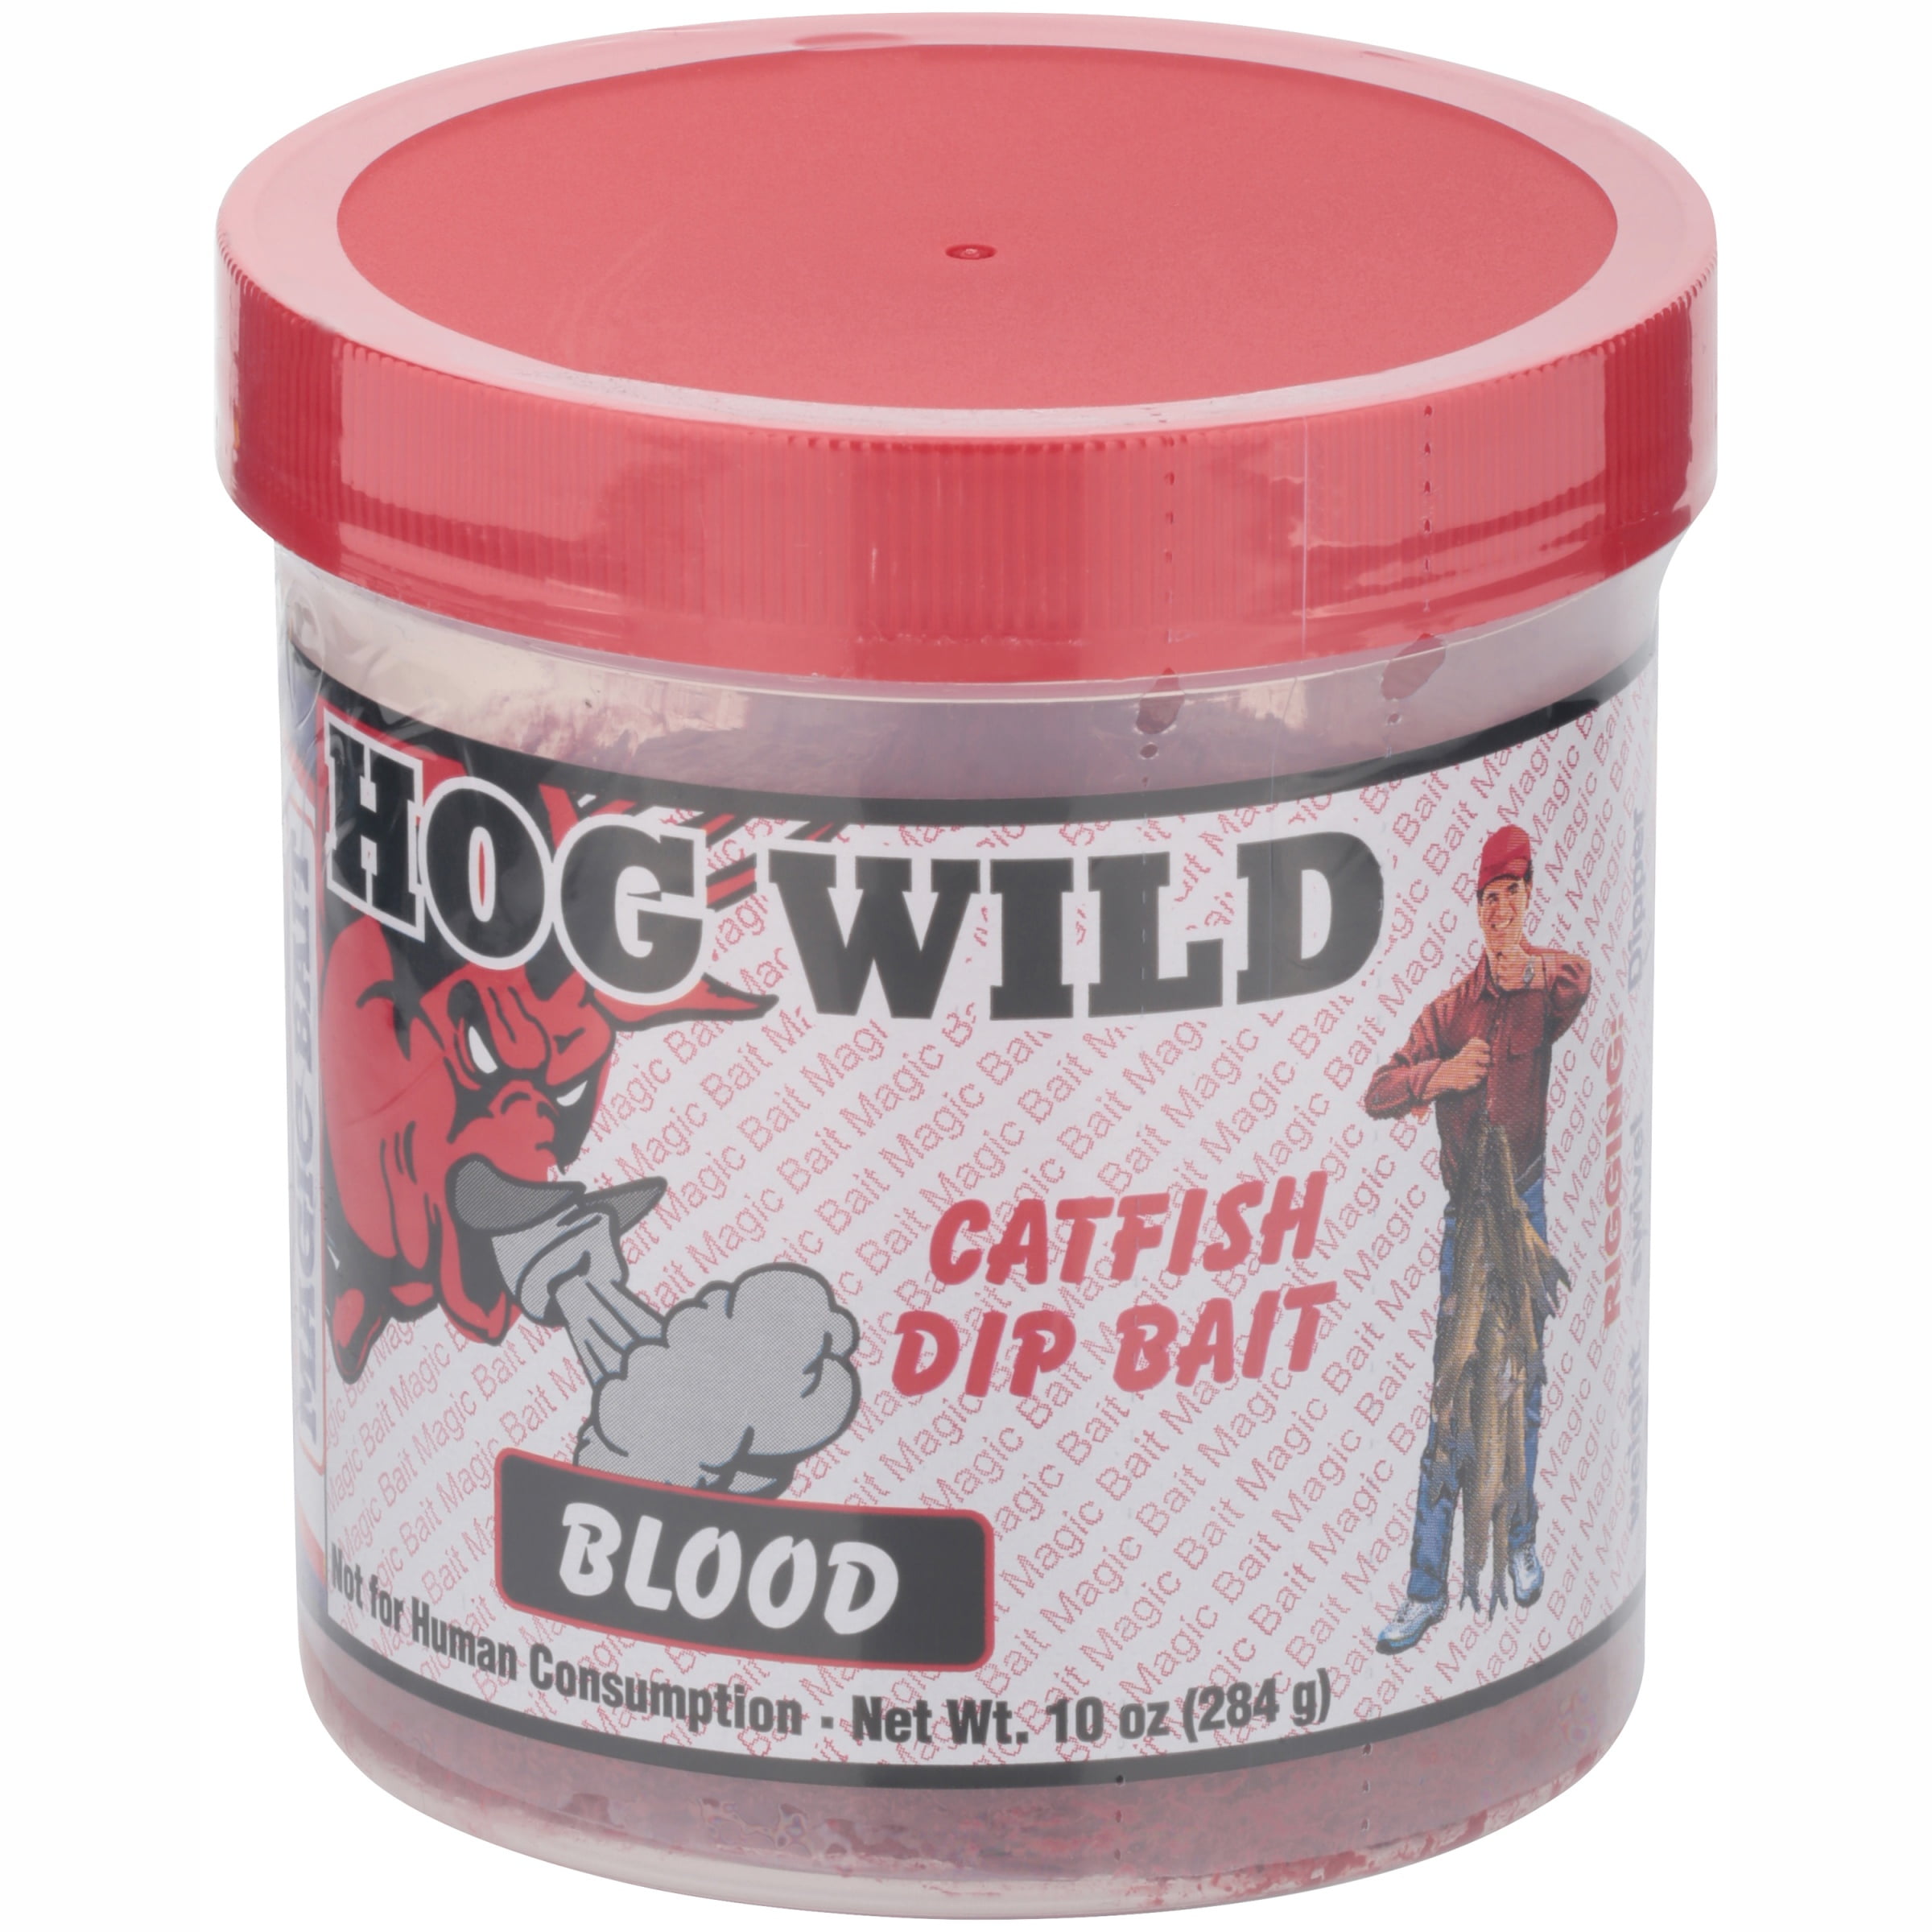 Magic Bait 48-34 7734 Catfish Hog Wild Tube Bait Holder Yellow 2ct 23950 for sale online 